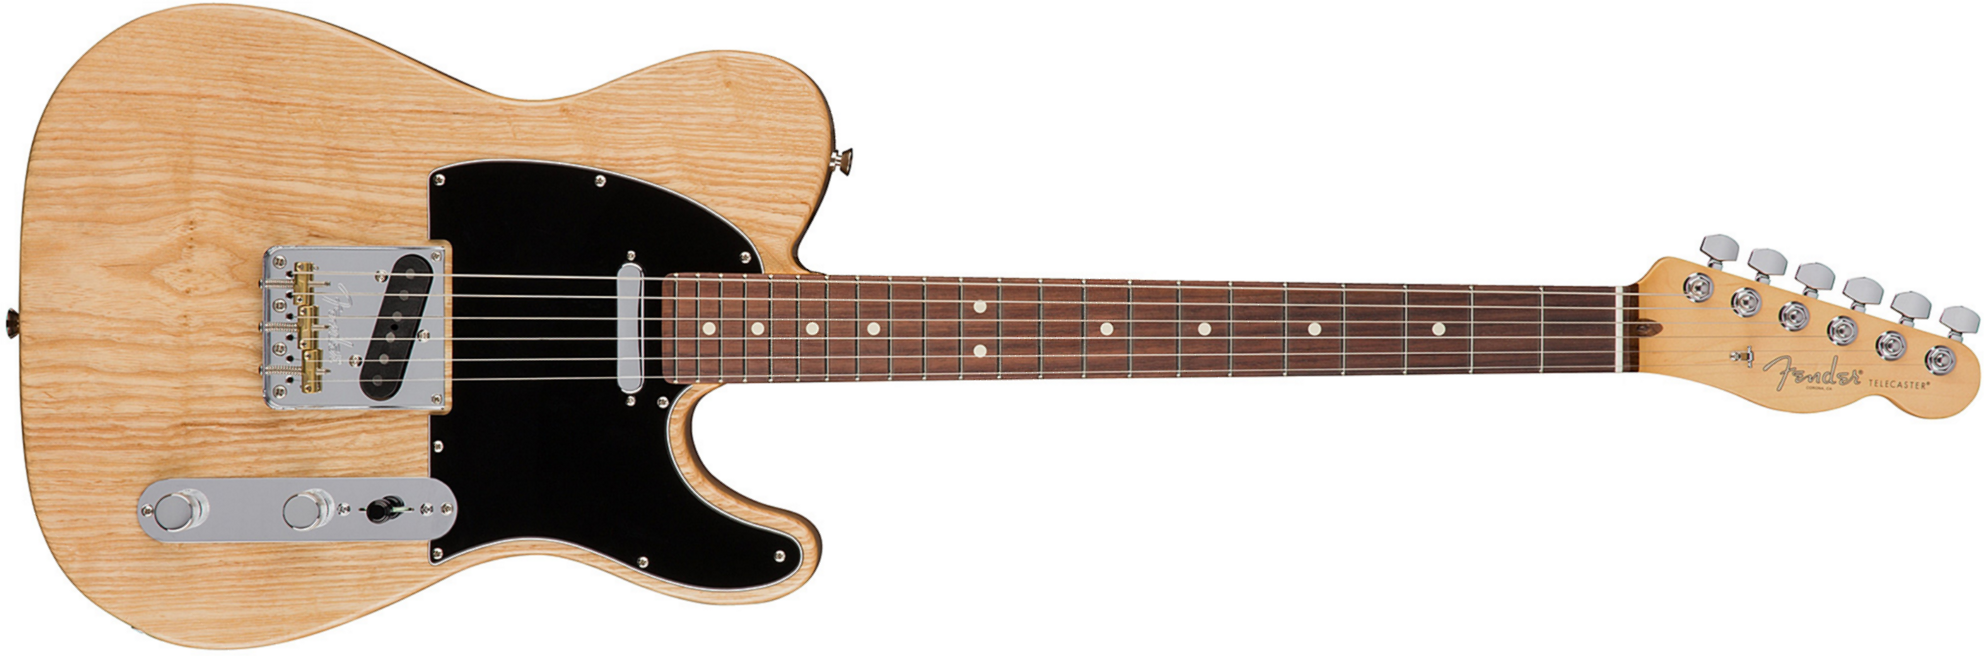 Fender Tele American Professional 2s Usa Rw - Natural - Guitarra eléctrica con forma de tel - Main picture